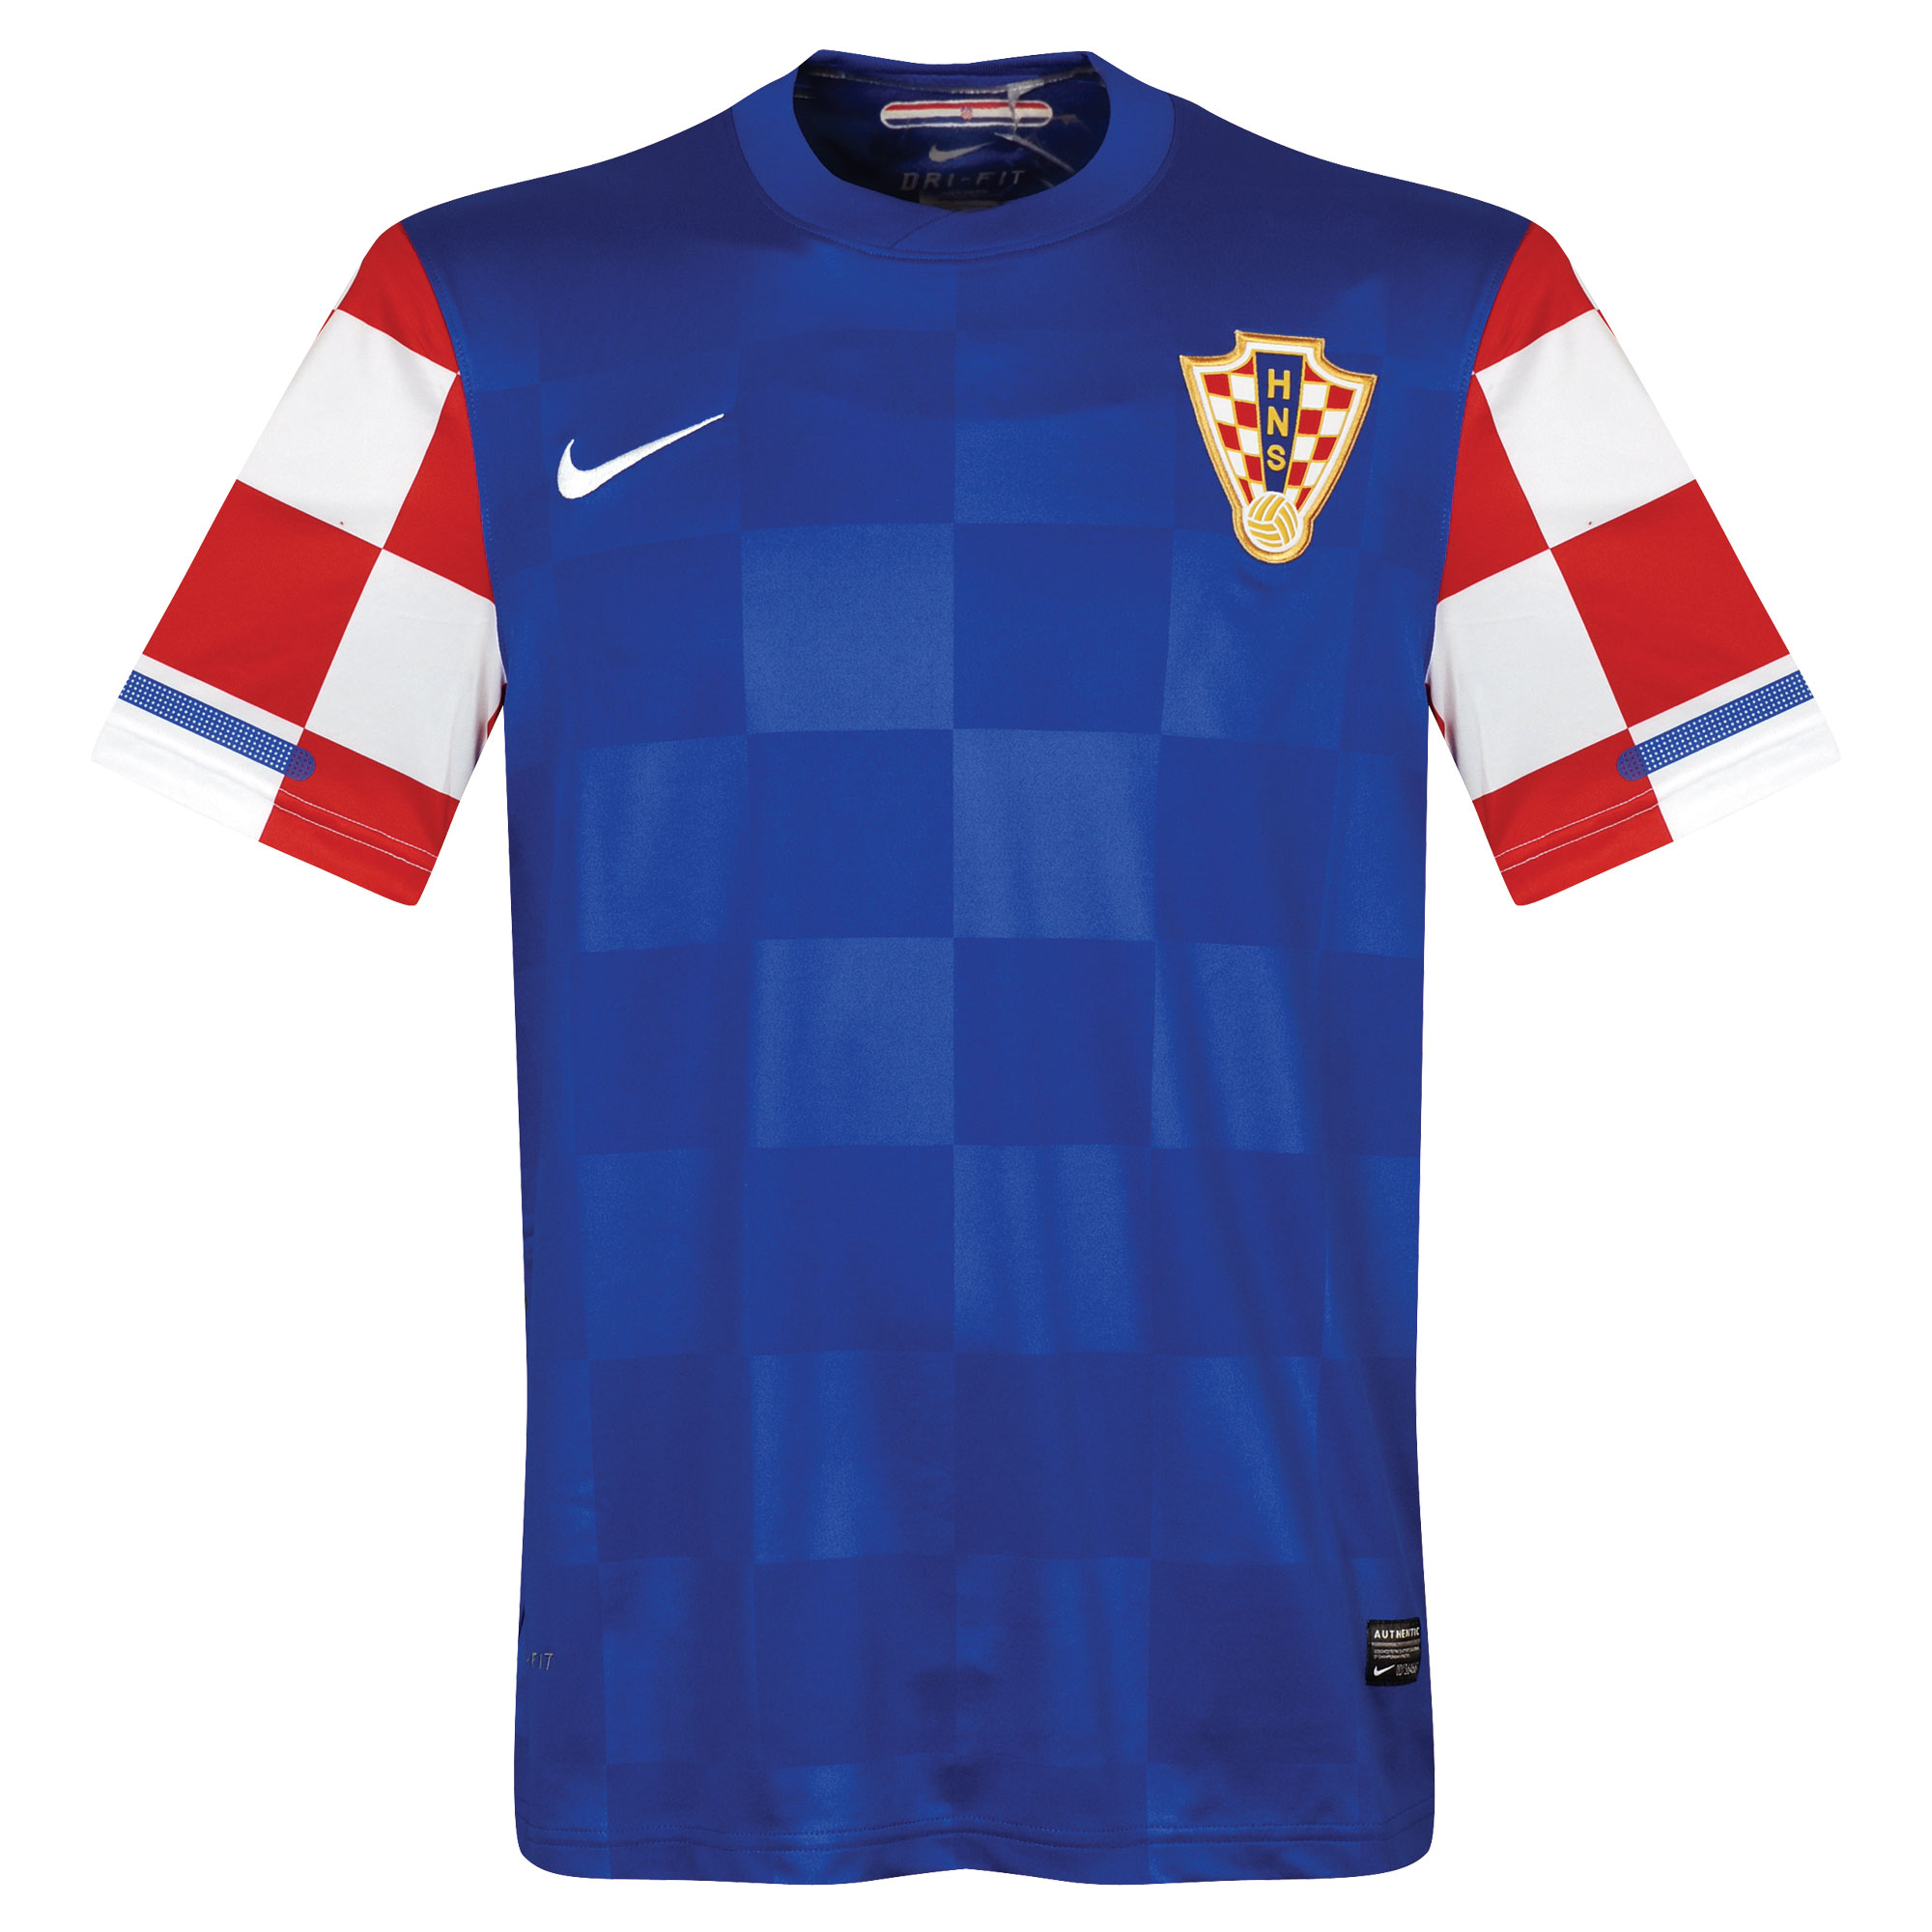 Croatia Away football shirt 2010 - 2012.